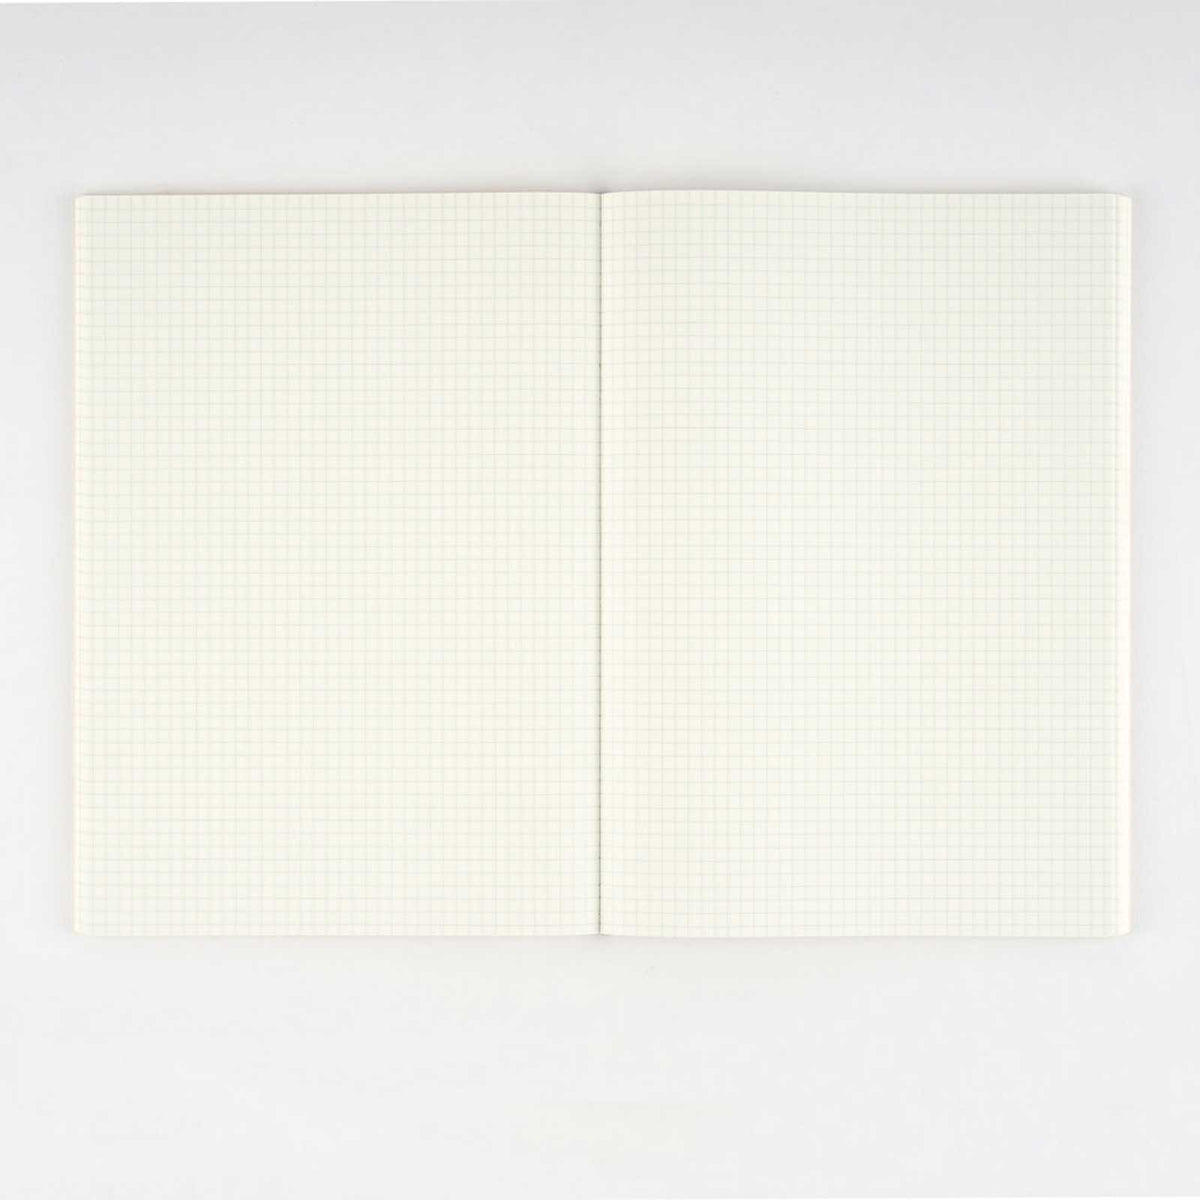 Hobonichi Plain Notebook (A6) Tomitaro Makino    at Boston General Store